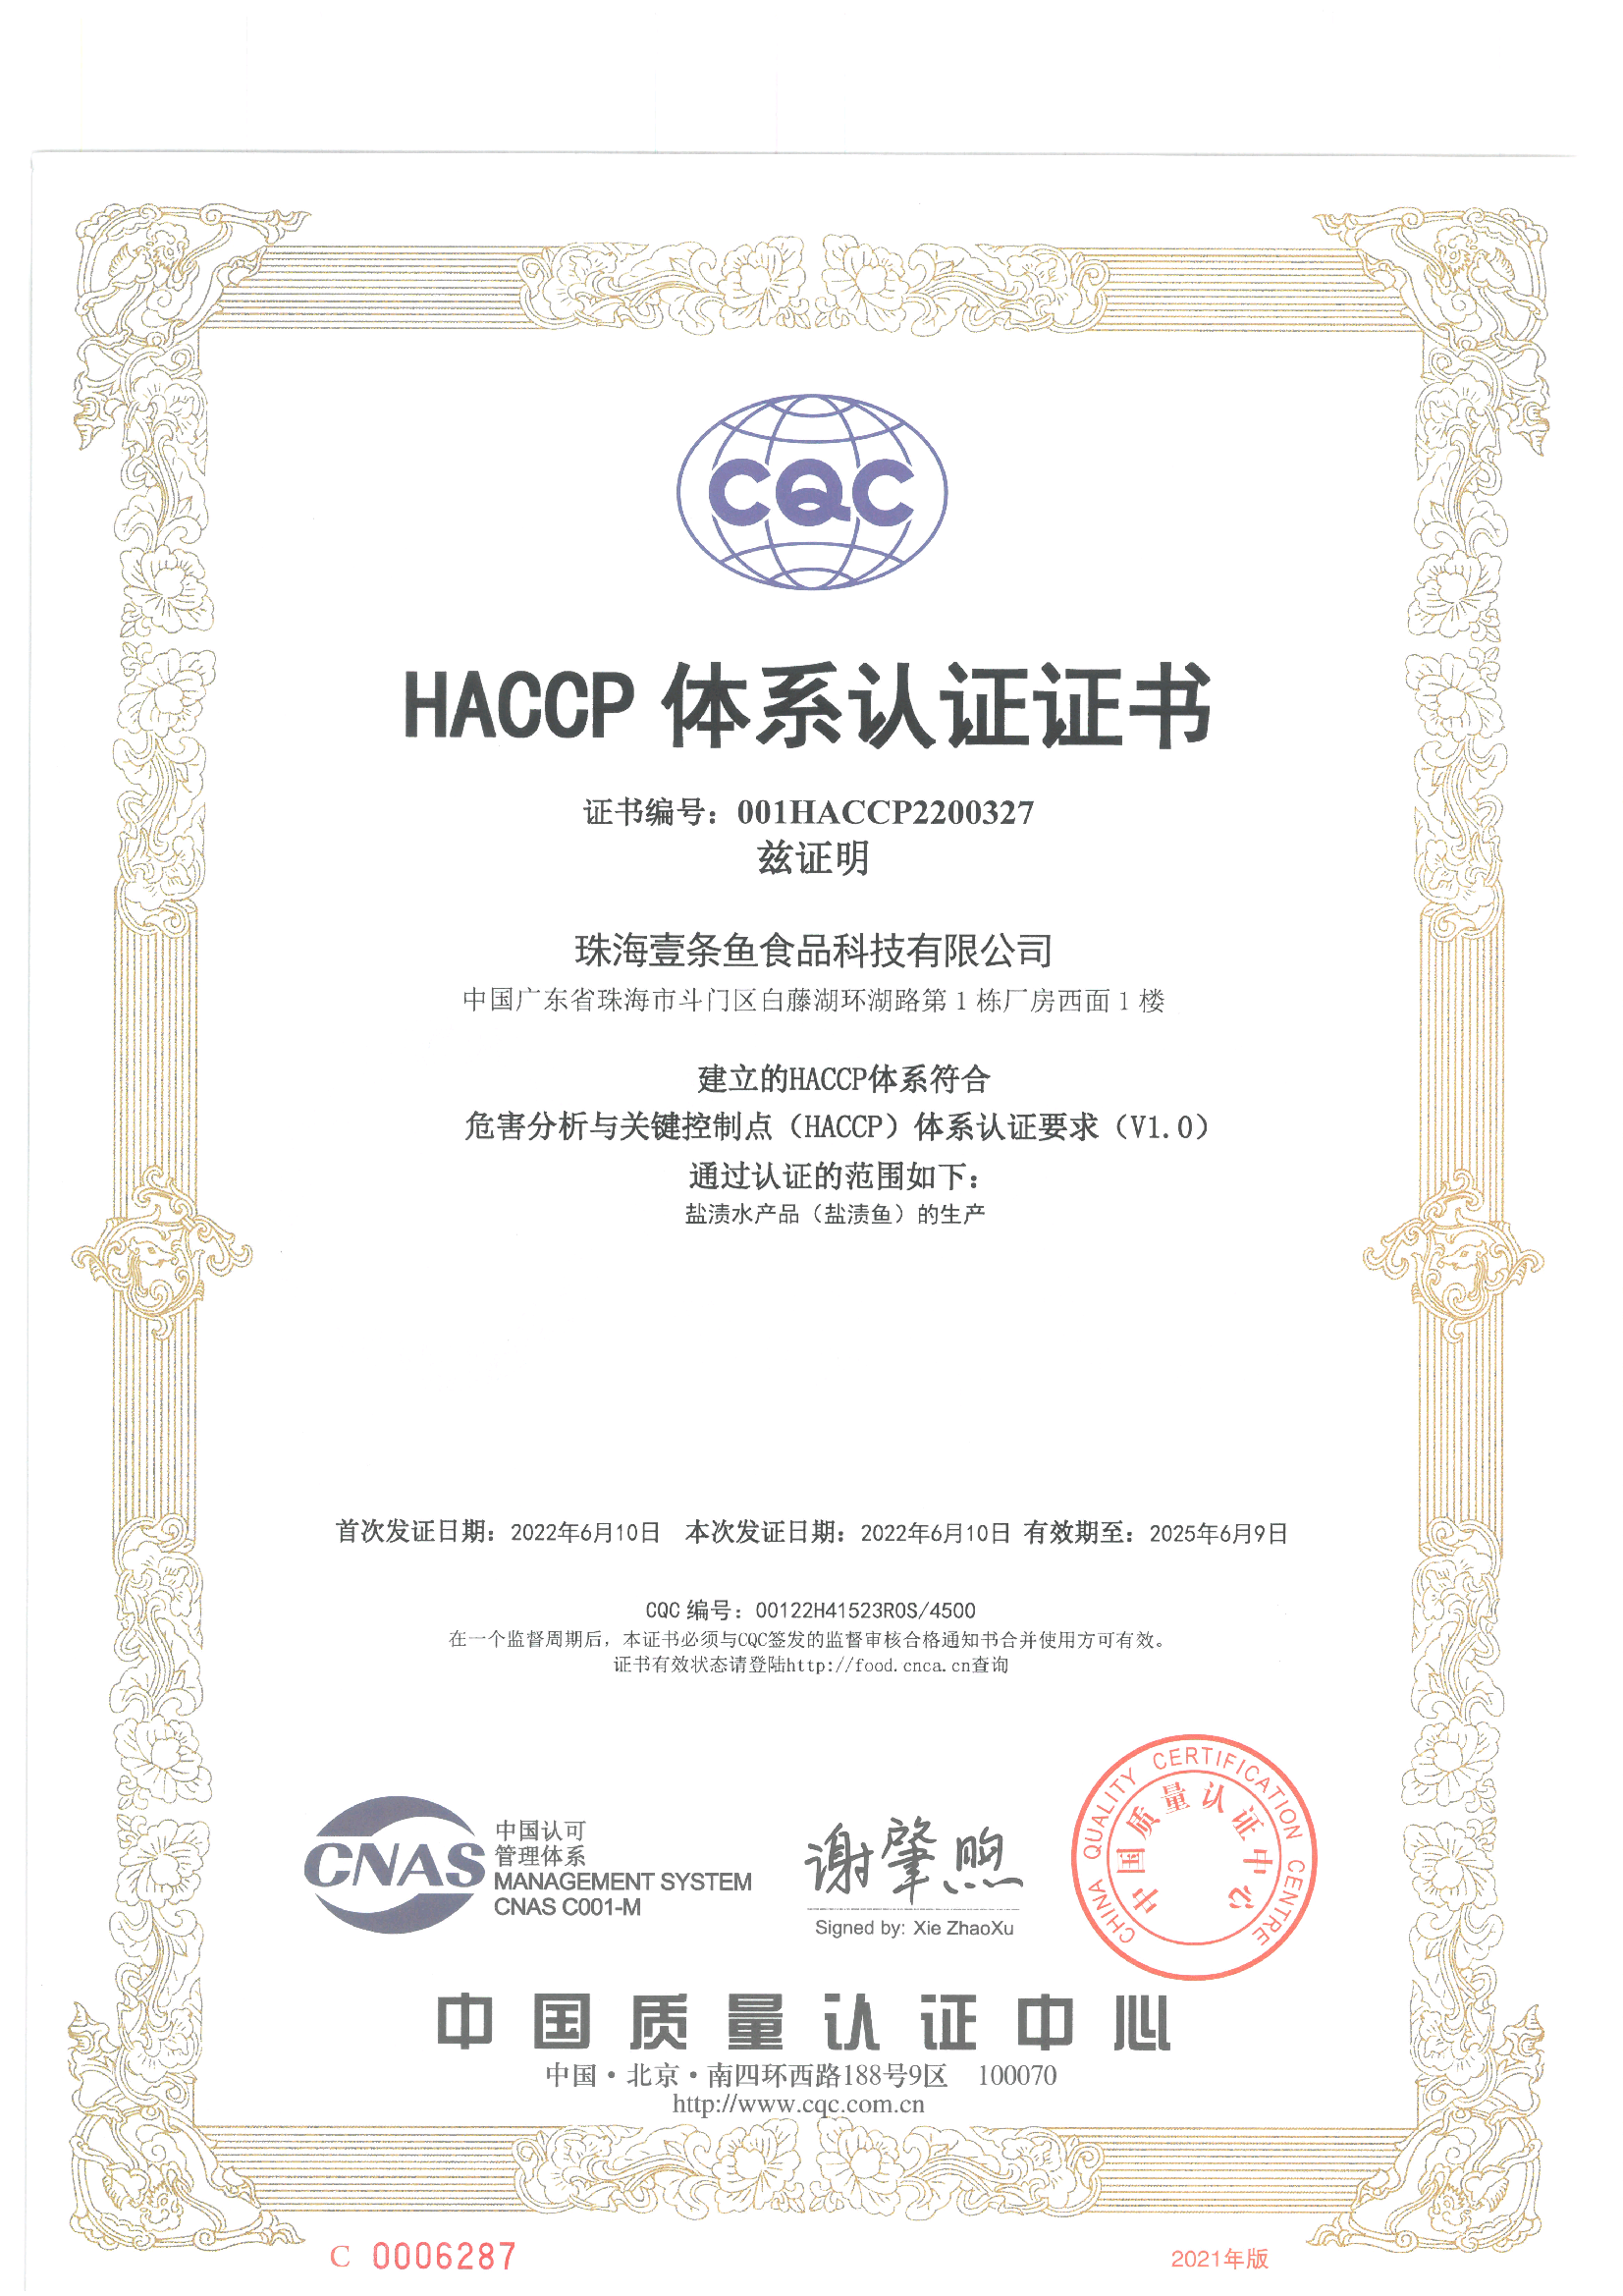 HACCP 认证证书-中文版.png